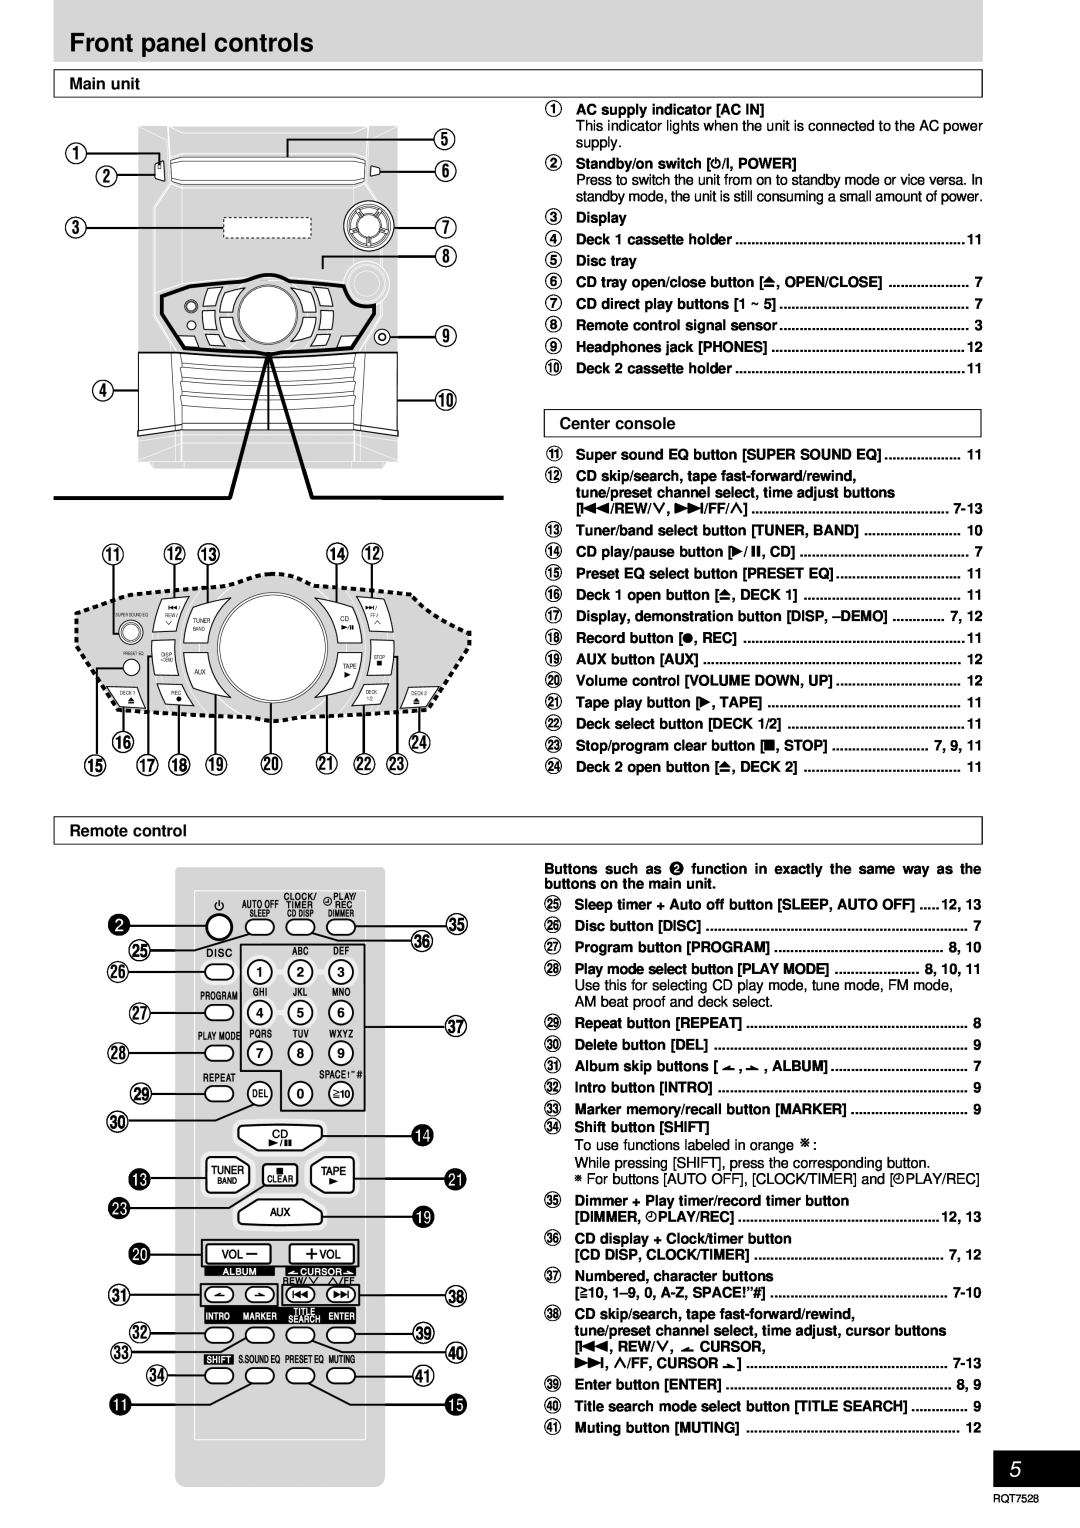 Panasonic SC-AK220 operating instructions Front panel controls, Main unit, Center console, Remote control 